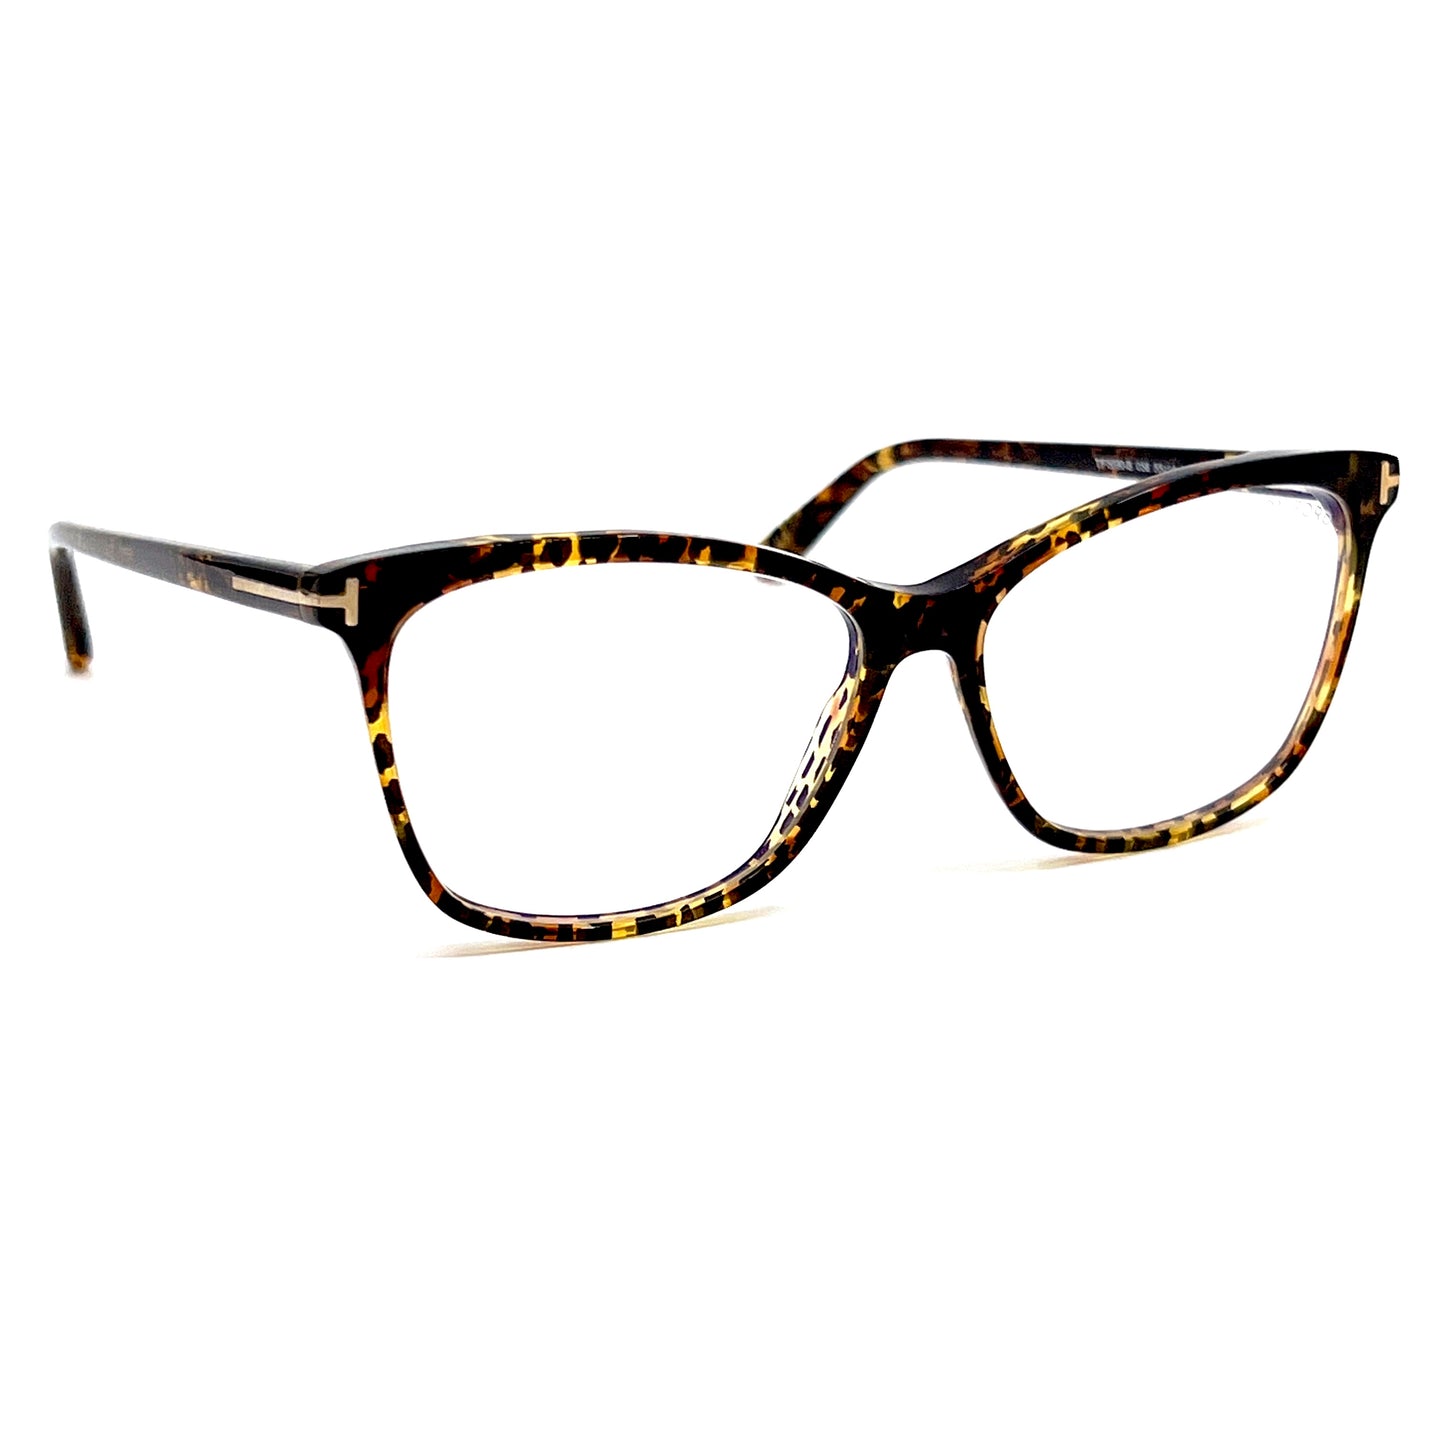 TOM FORD Clip-On Sunglasses/Eyeglasses TF5690-B 056